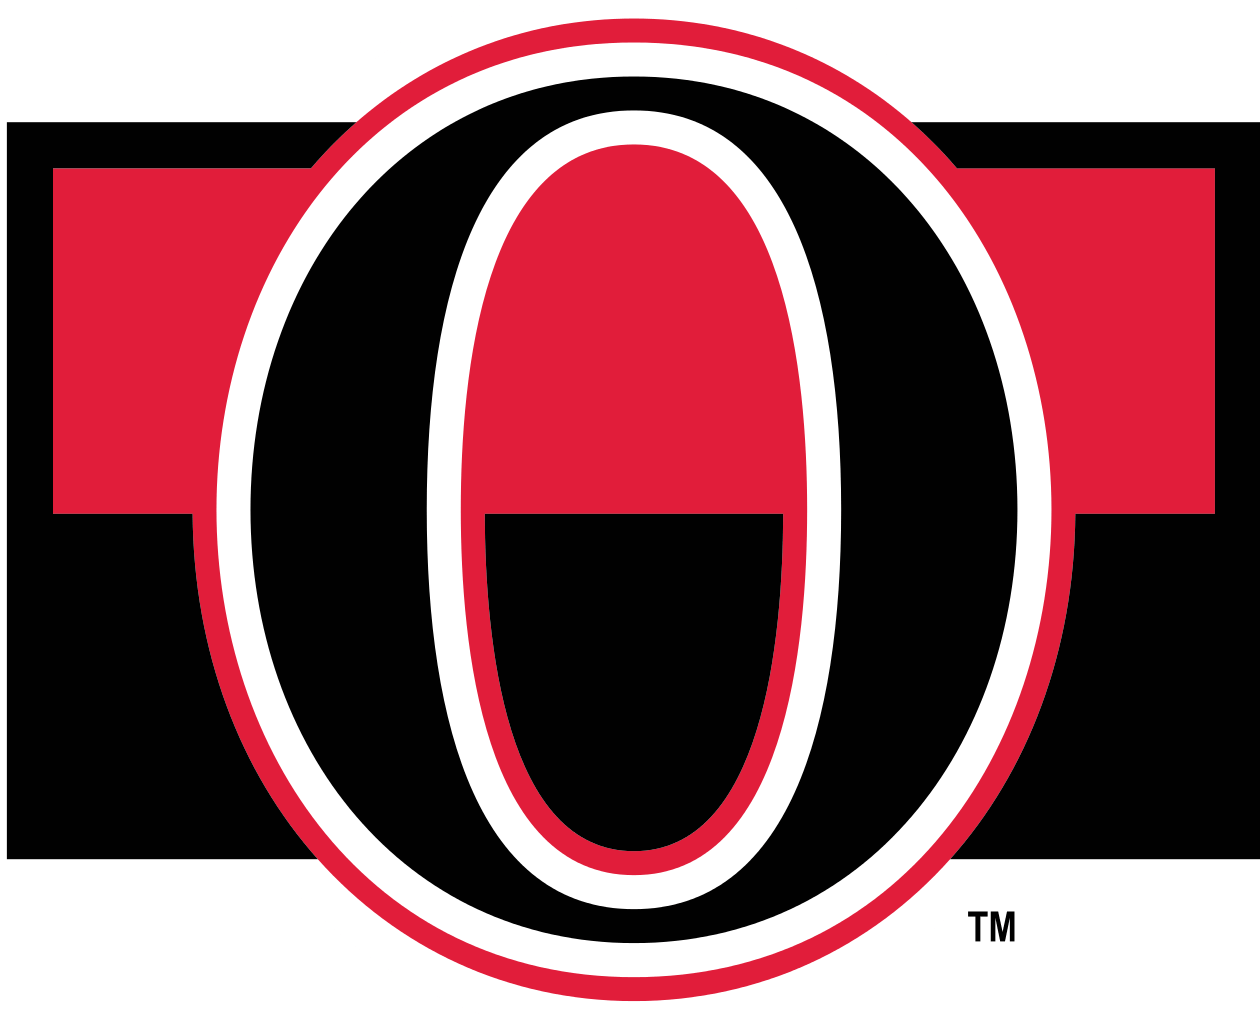 Senator Logo - What ifThe Senators Changed Their Identity?. Hockey By Design